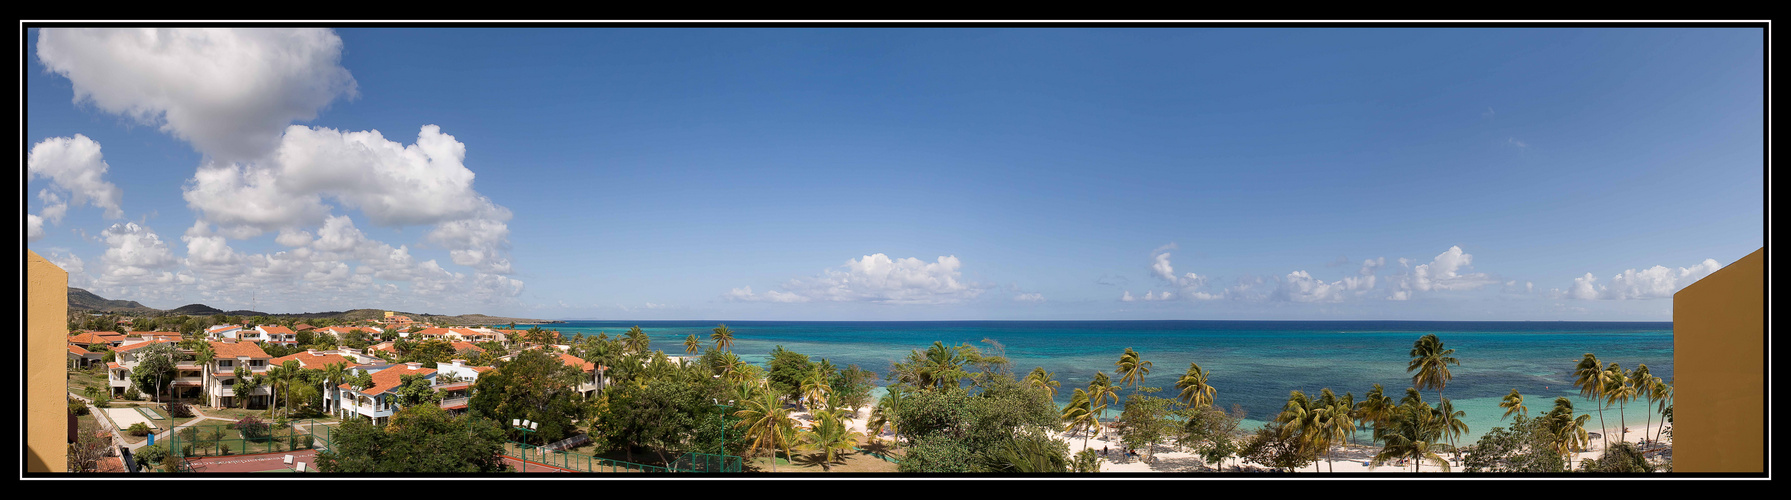 Panorama von Hotelanlage in Guardalavaca Cuba